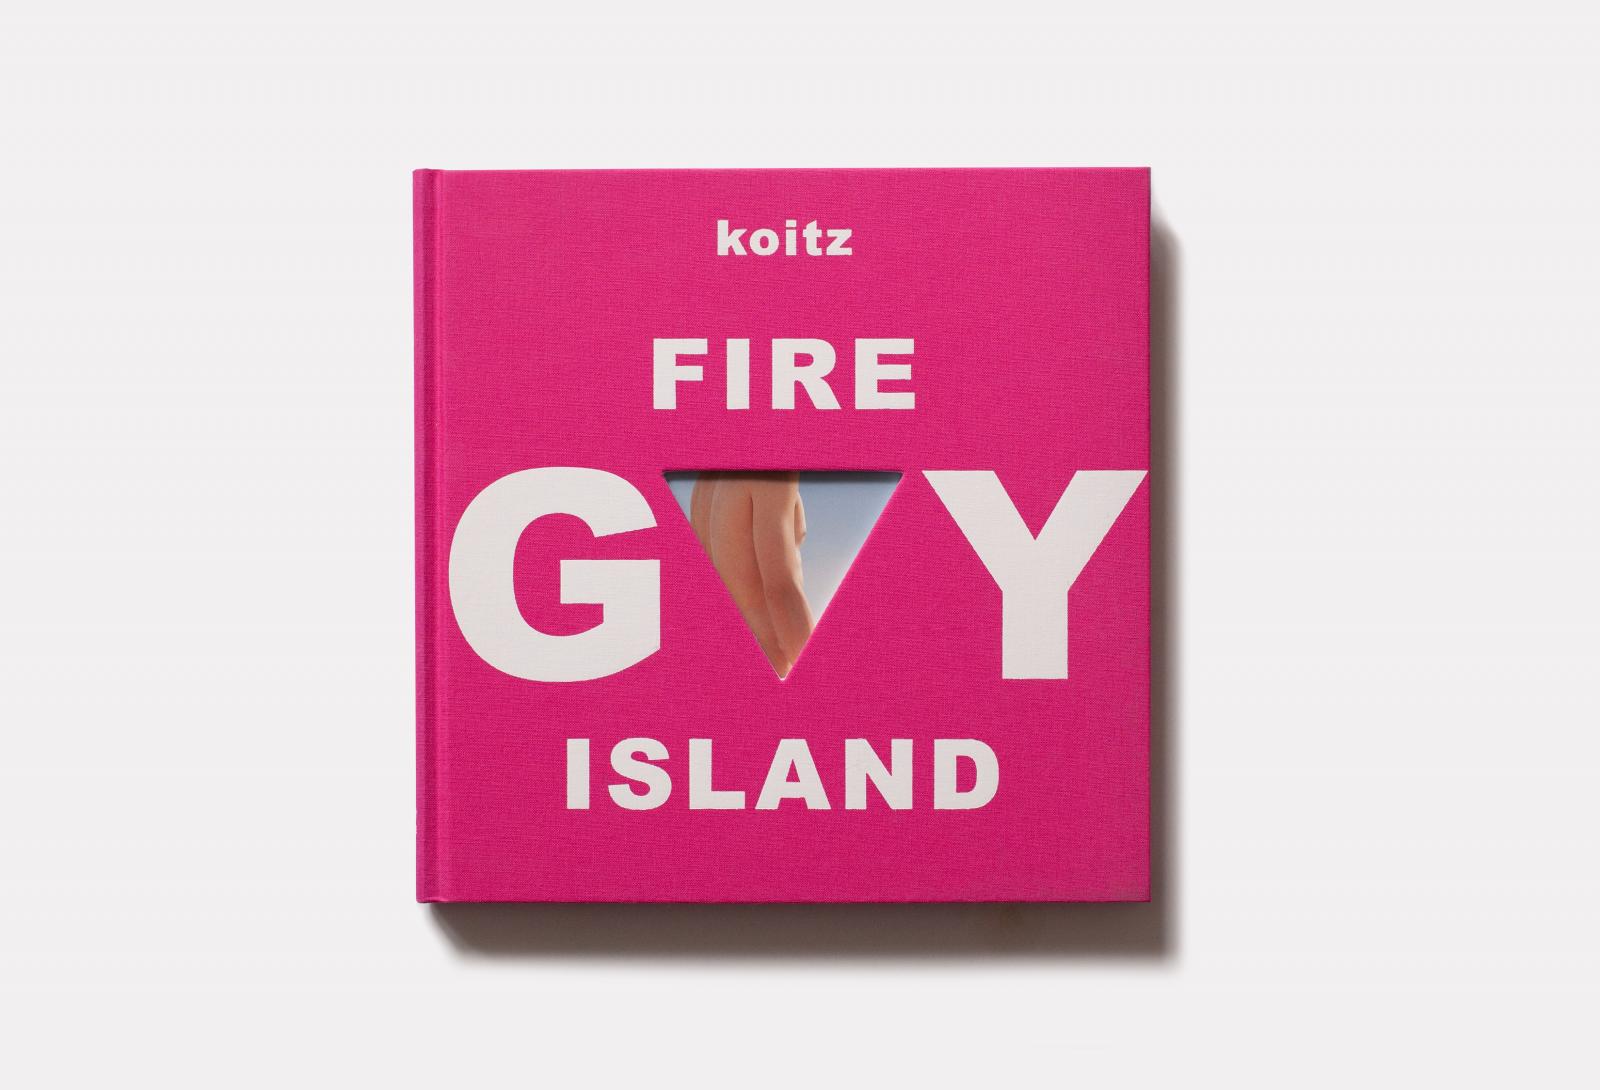 gay fire island koitz 2020